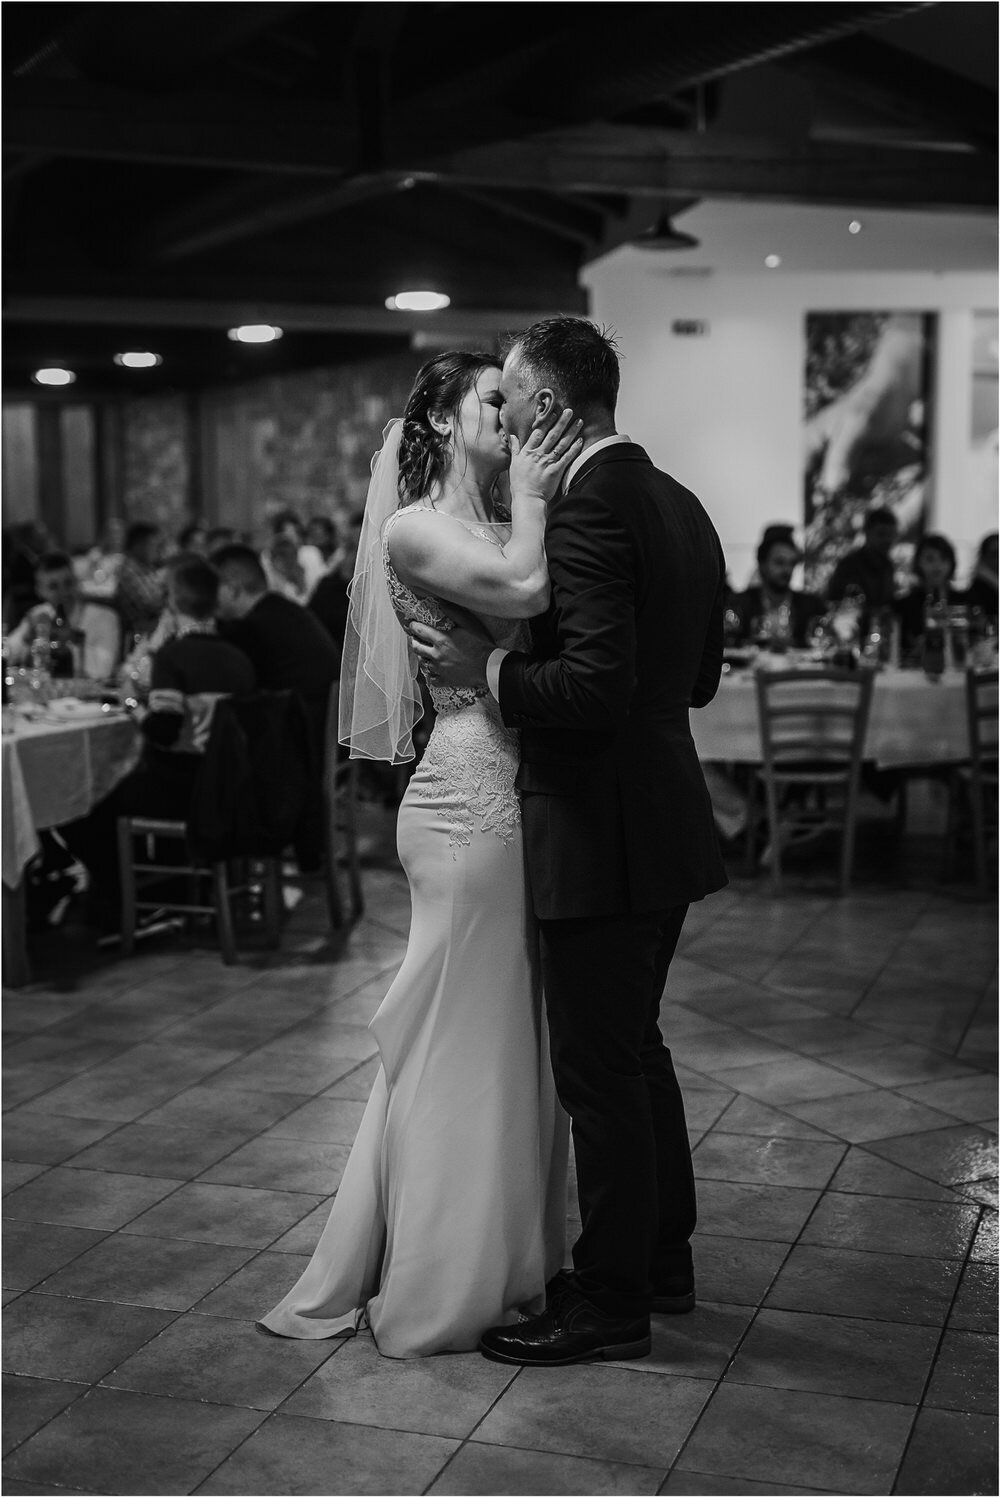 best of wedding photography 2019 photographer italy ireland tuscany santorini greece spain barcelona lake como chateux scotland destination wedding 0112.jpg